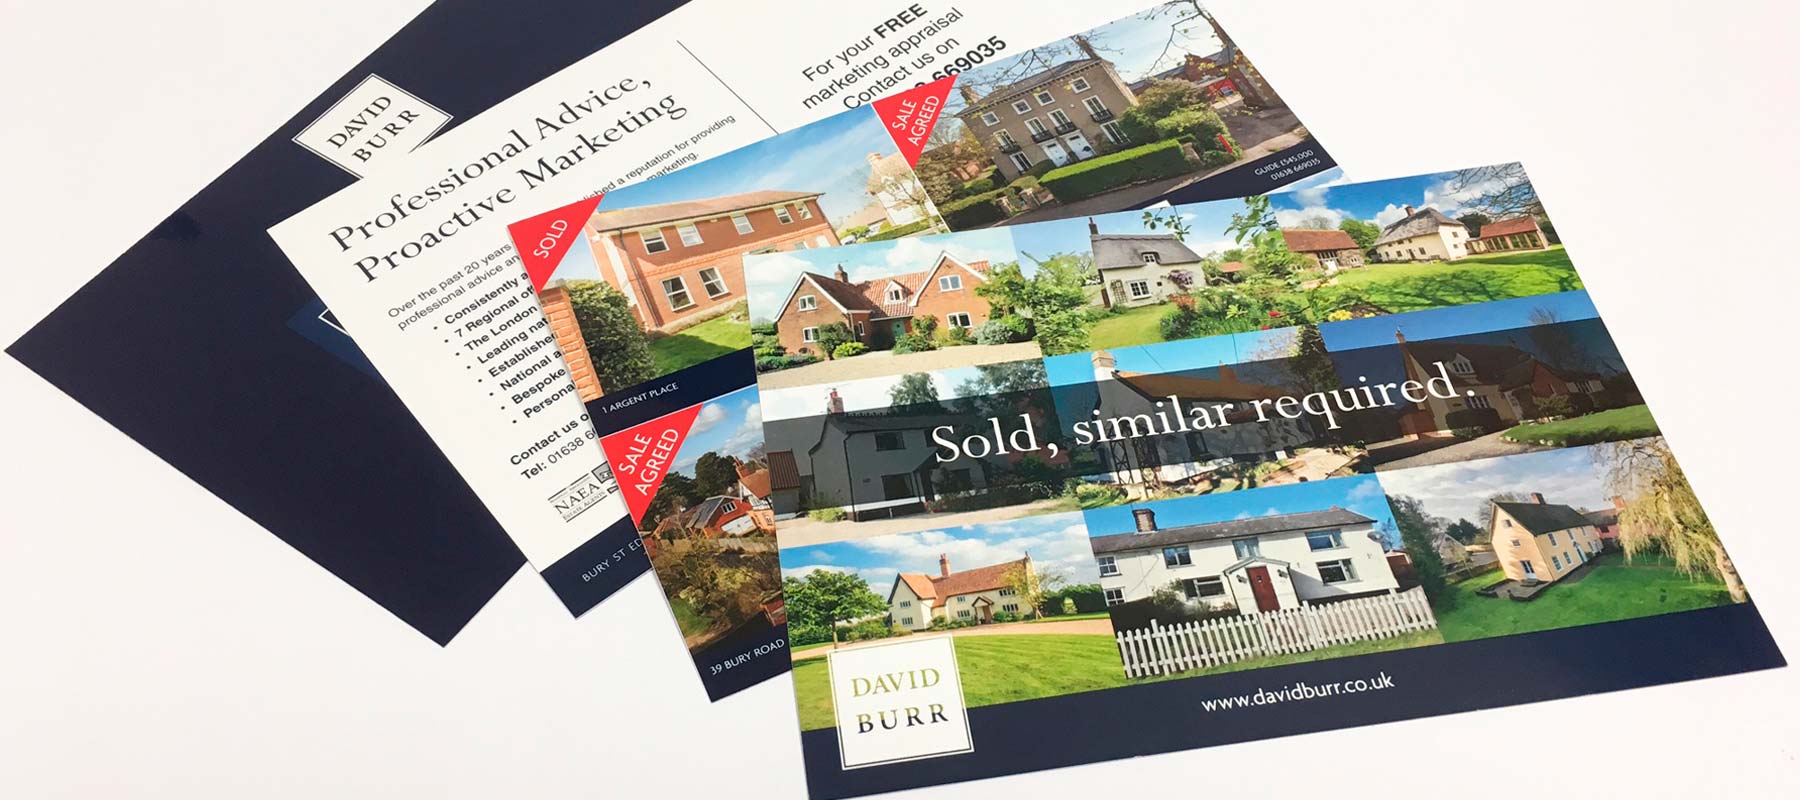 David Burr - Postcards - Leaflets - Sudbury - Suffolk - East Anglia - Digital Print - Graphic Design